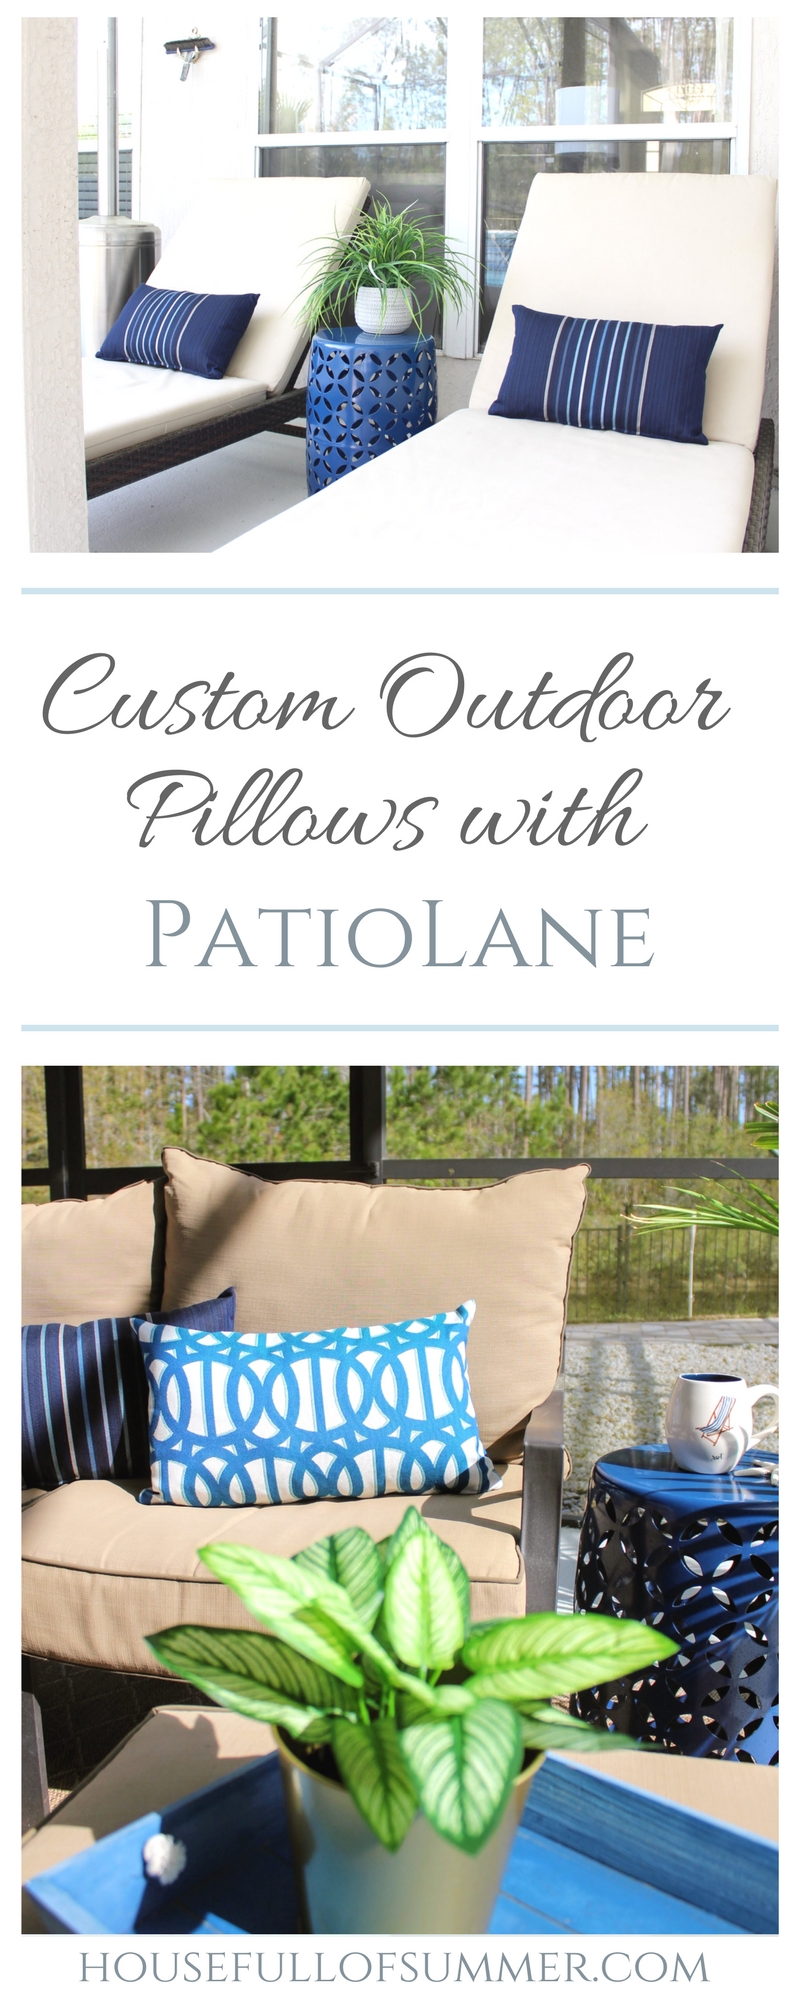 https://images.squarespace-cdn.com/content/v1/5939e31f3e00be788e6df8e7/1522681515335-MN0TQJ85MTDOUEQXESW2/Custom+Outdoor+Pillows+with+PatioLane+%7C+House+Full+of+Summer+outdoor+living%2C+patio+decor%2C+coastal+patio+style%2C+lanai%2C+spring+patio+updates%2C+custom+cushion+builder%2C+tropical+style%2C+florida+living%2C+florida+backyard+design%2C+enclosed+pool+and+patio%2C+navy+and+white+patio.+porch+decor%2C+palms%2C